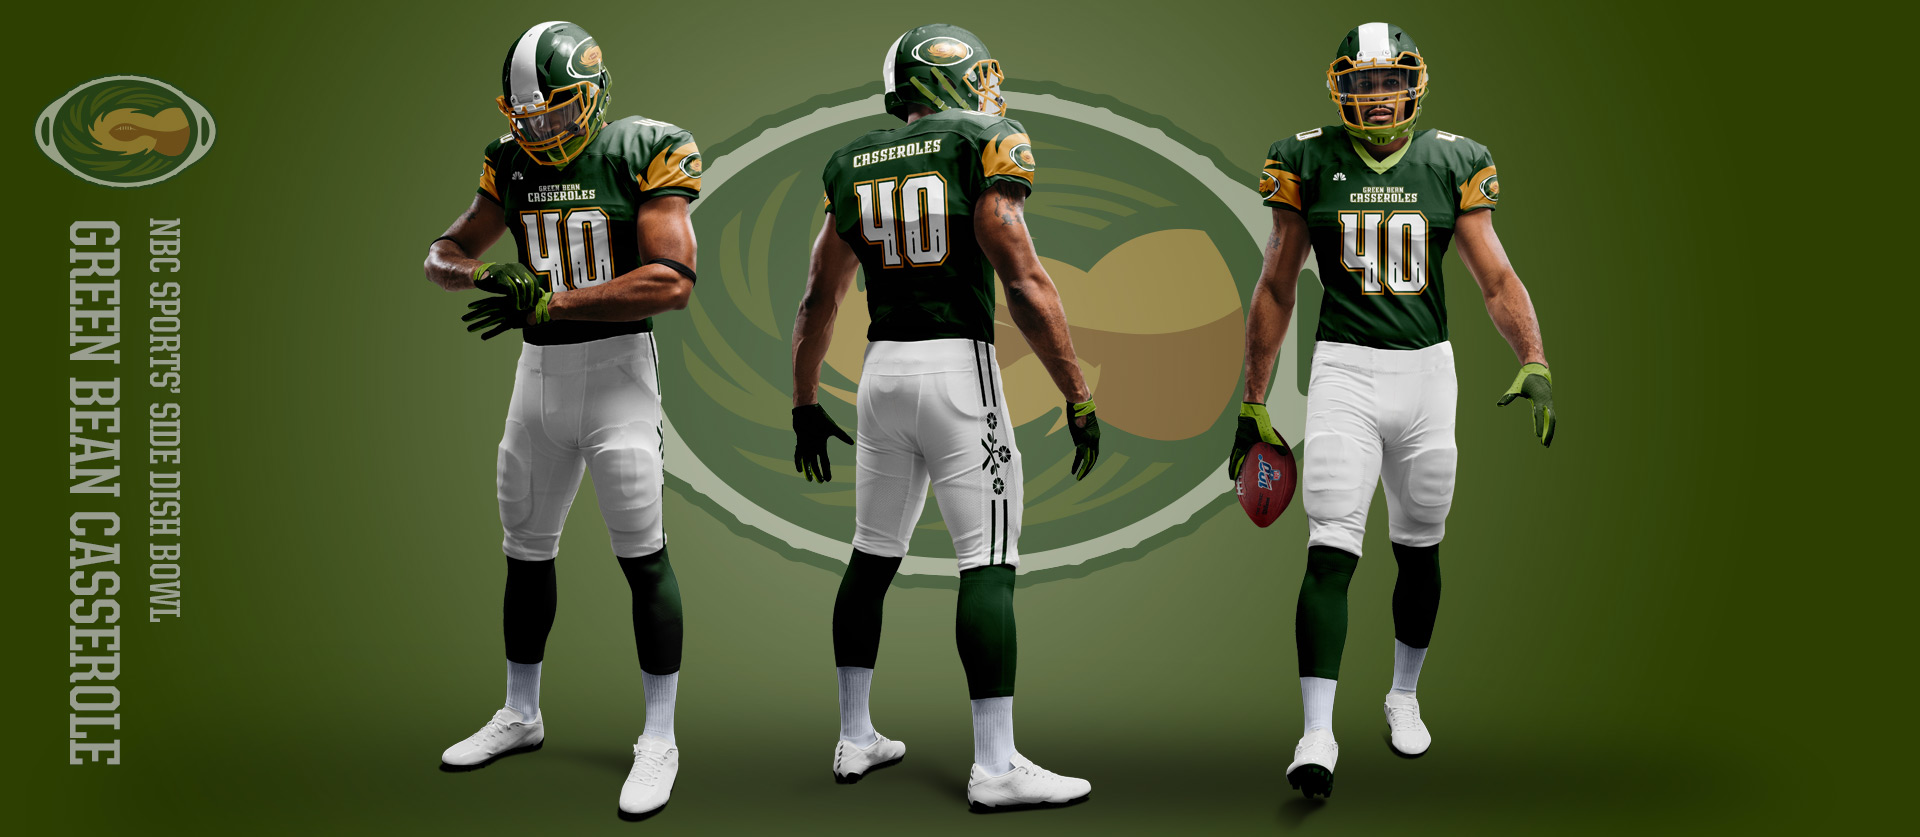 Green Bean Casseroles - Football Uniform Design for NBC Sports Thanksgiving Side Dish Bowl